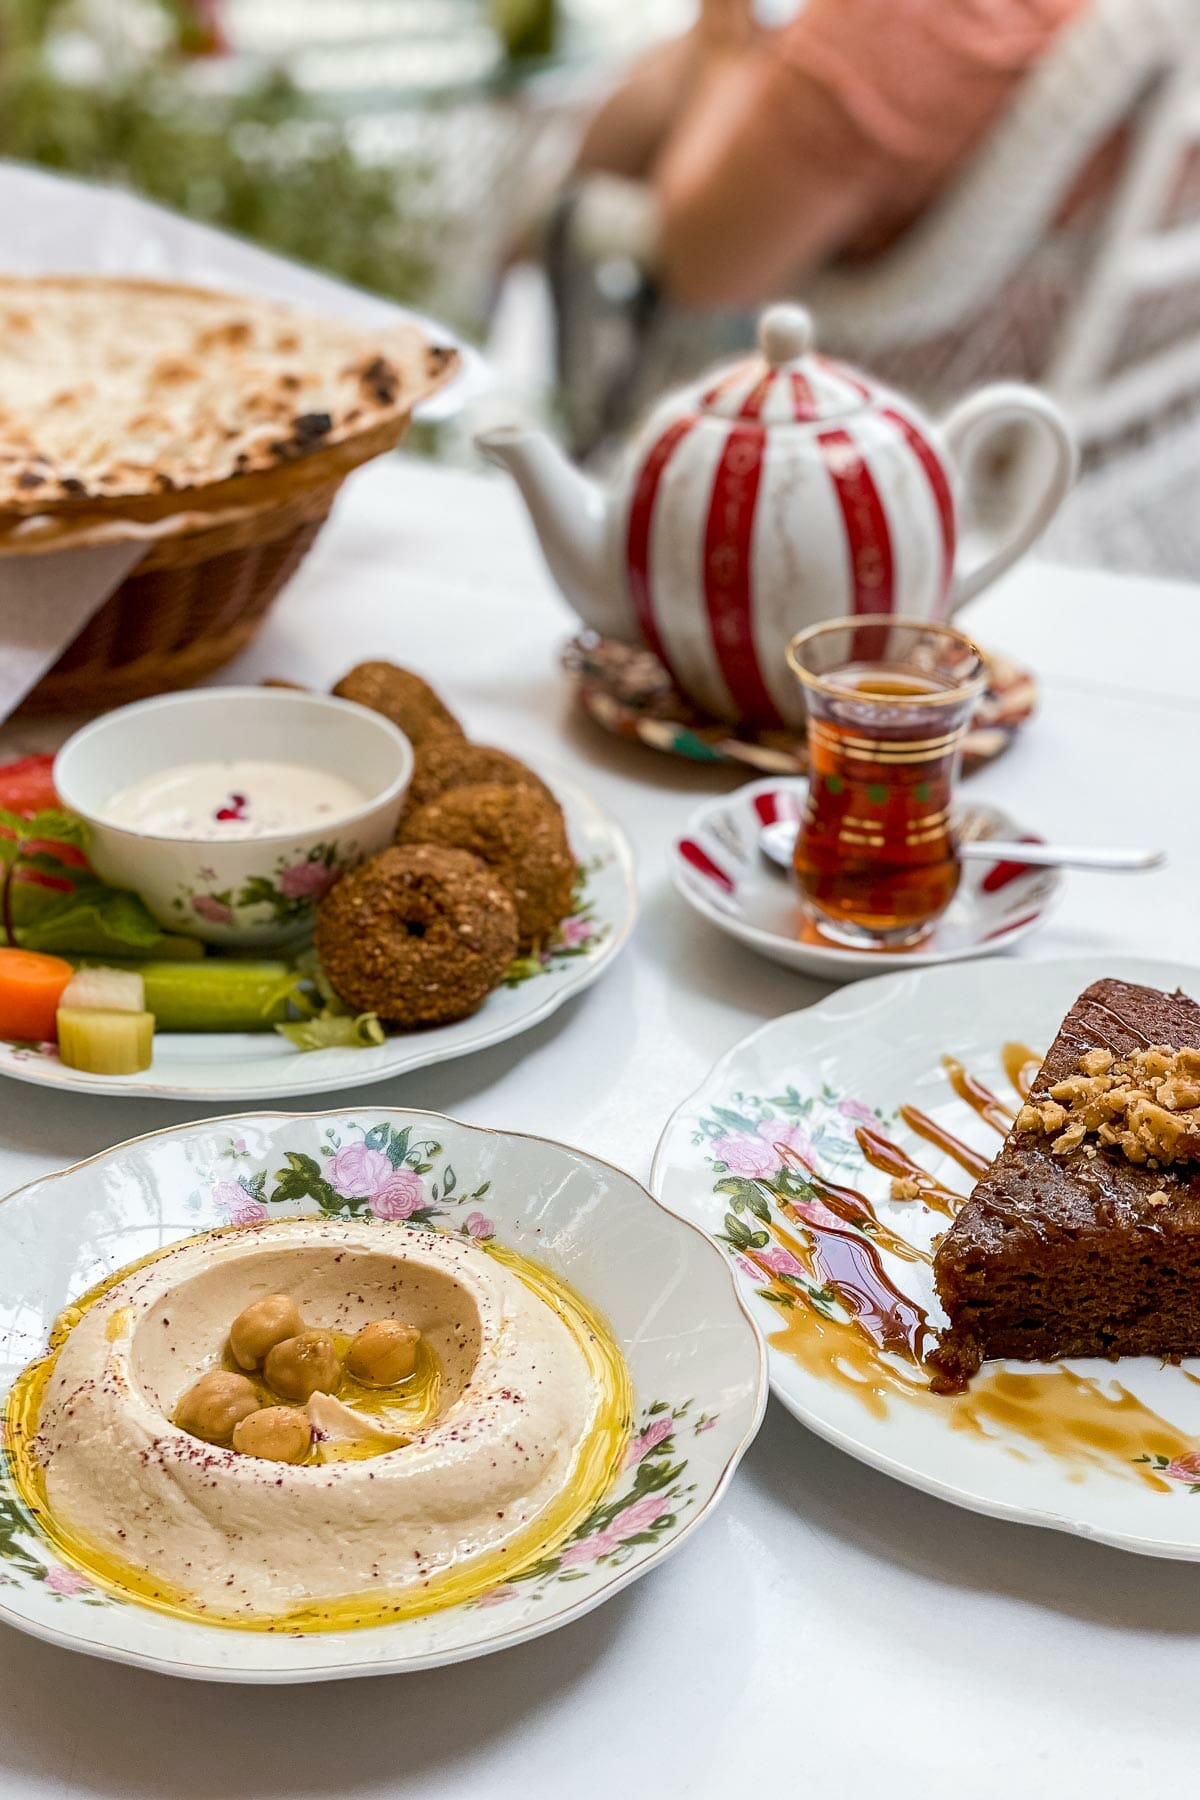 Food at the Arabian Tea House in Dubai